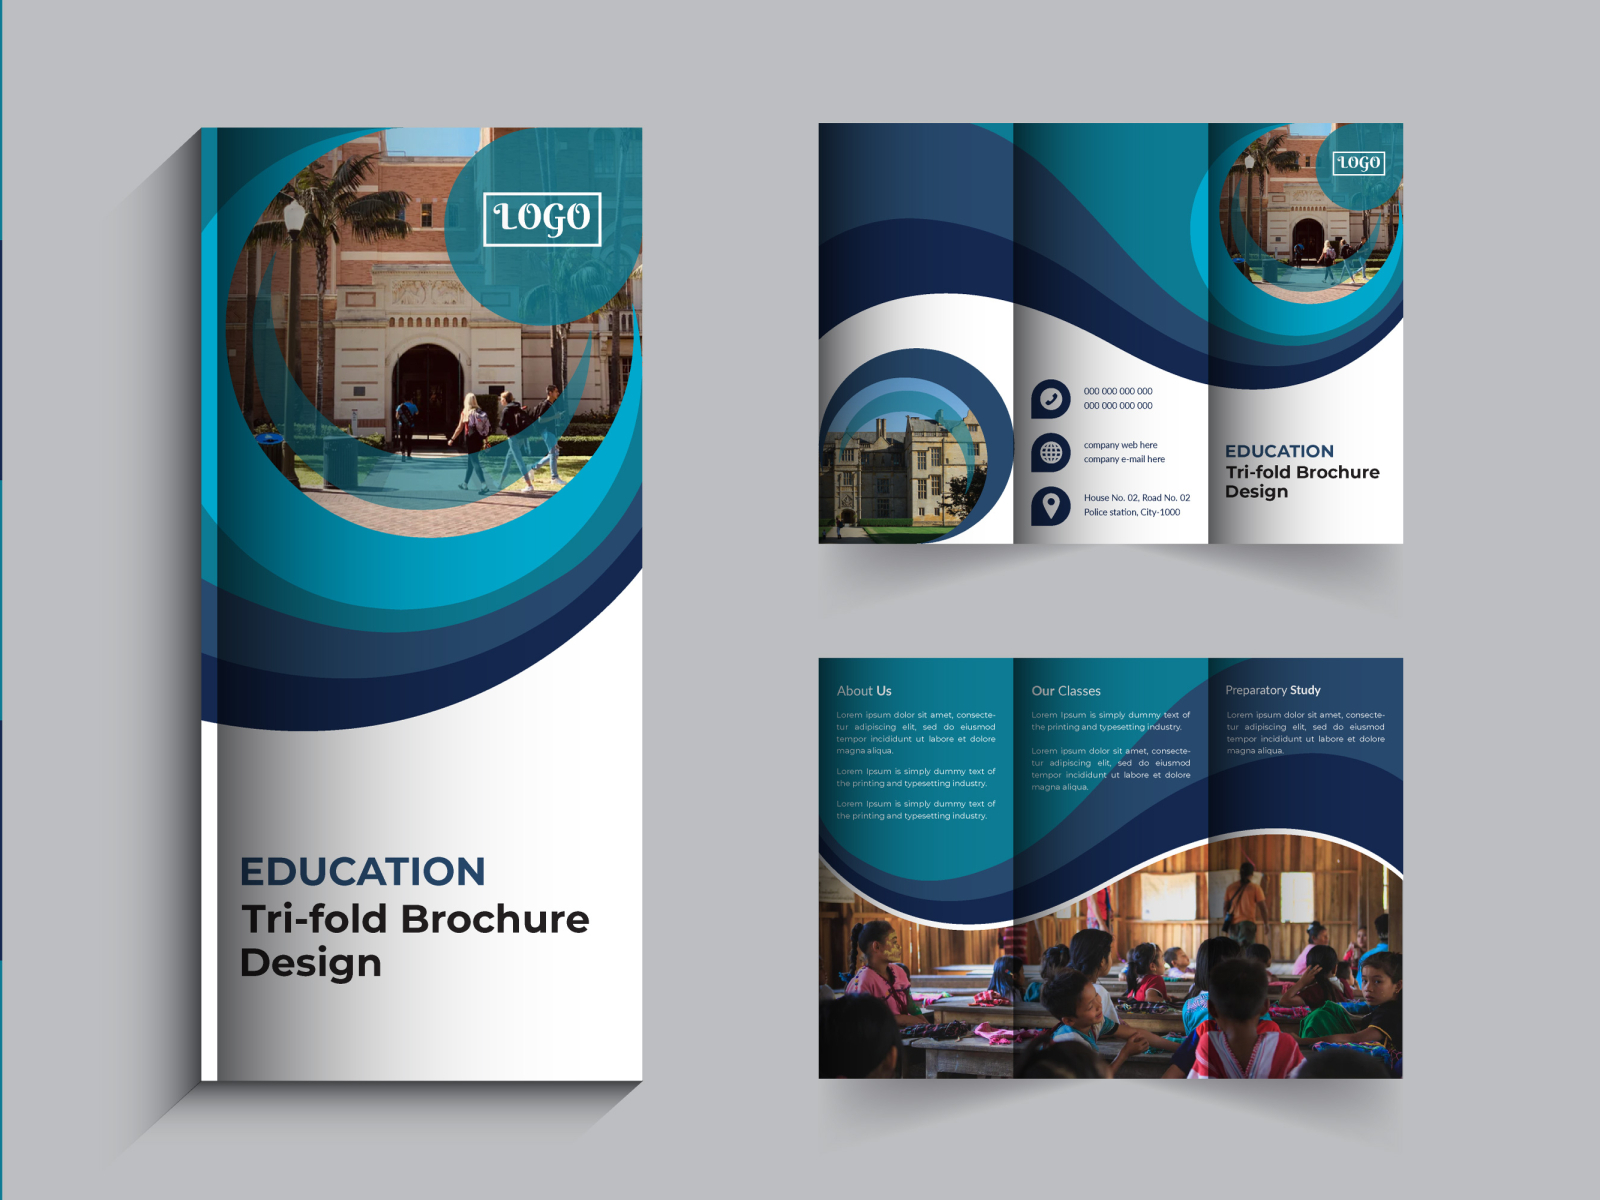 Education Tri-fold Brochure Template Design by hmabdulaziz22 on Intended For Tri Fold School Brochure Template